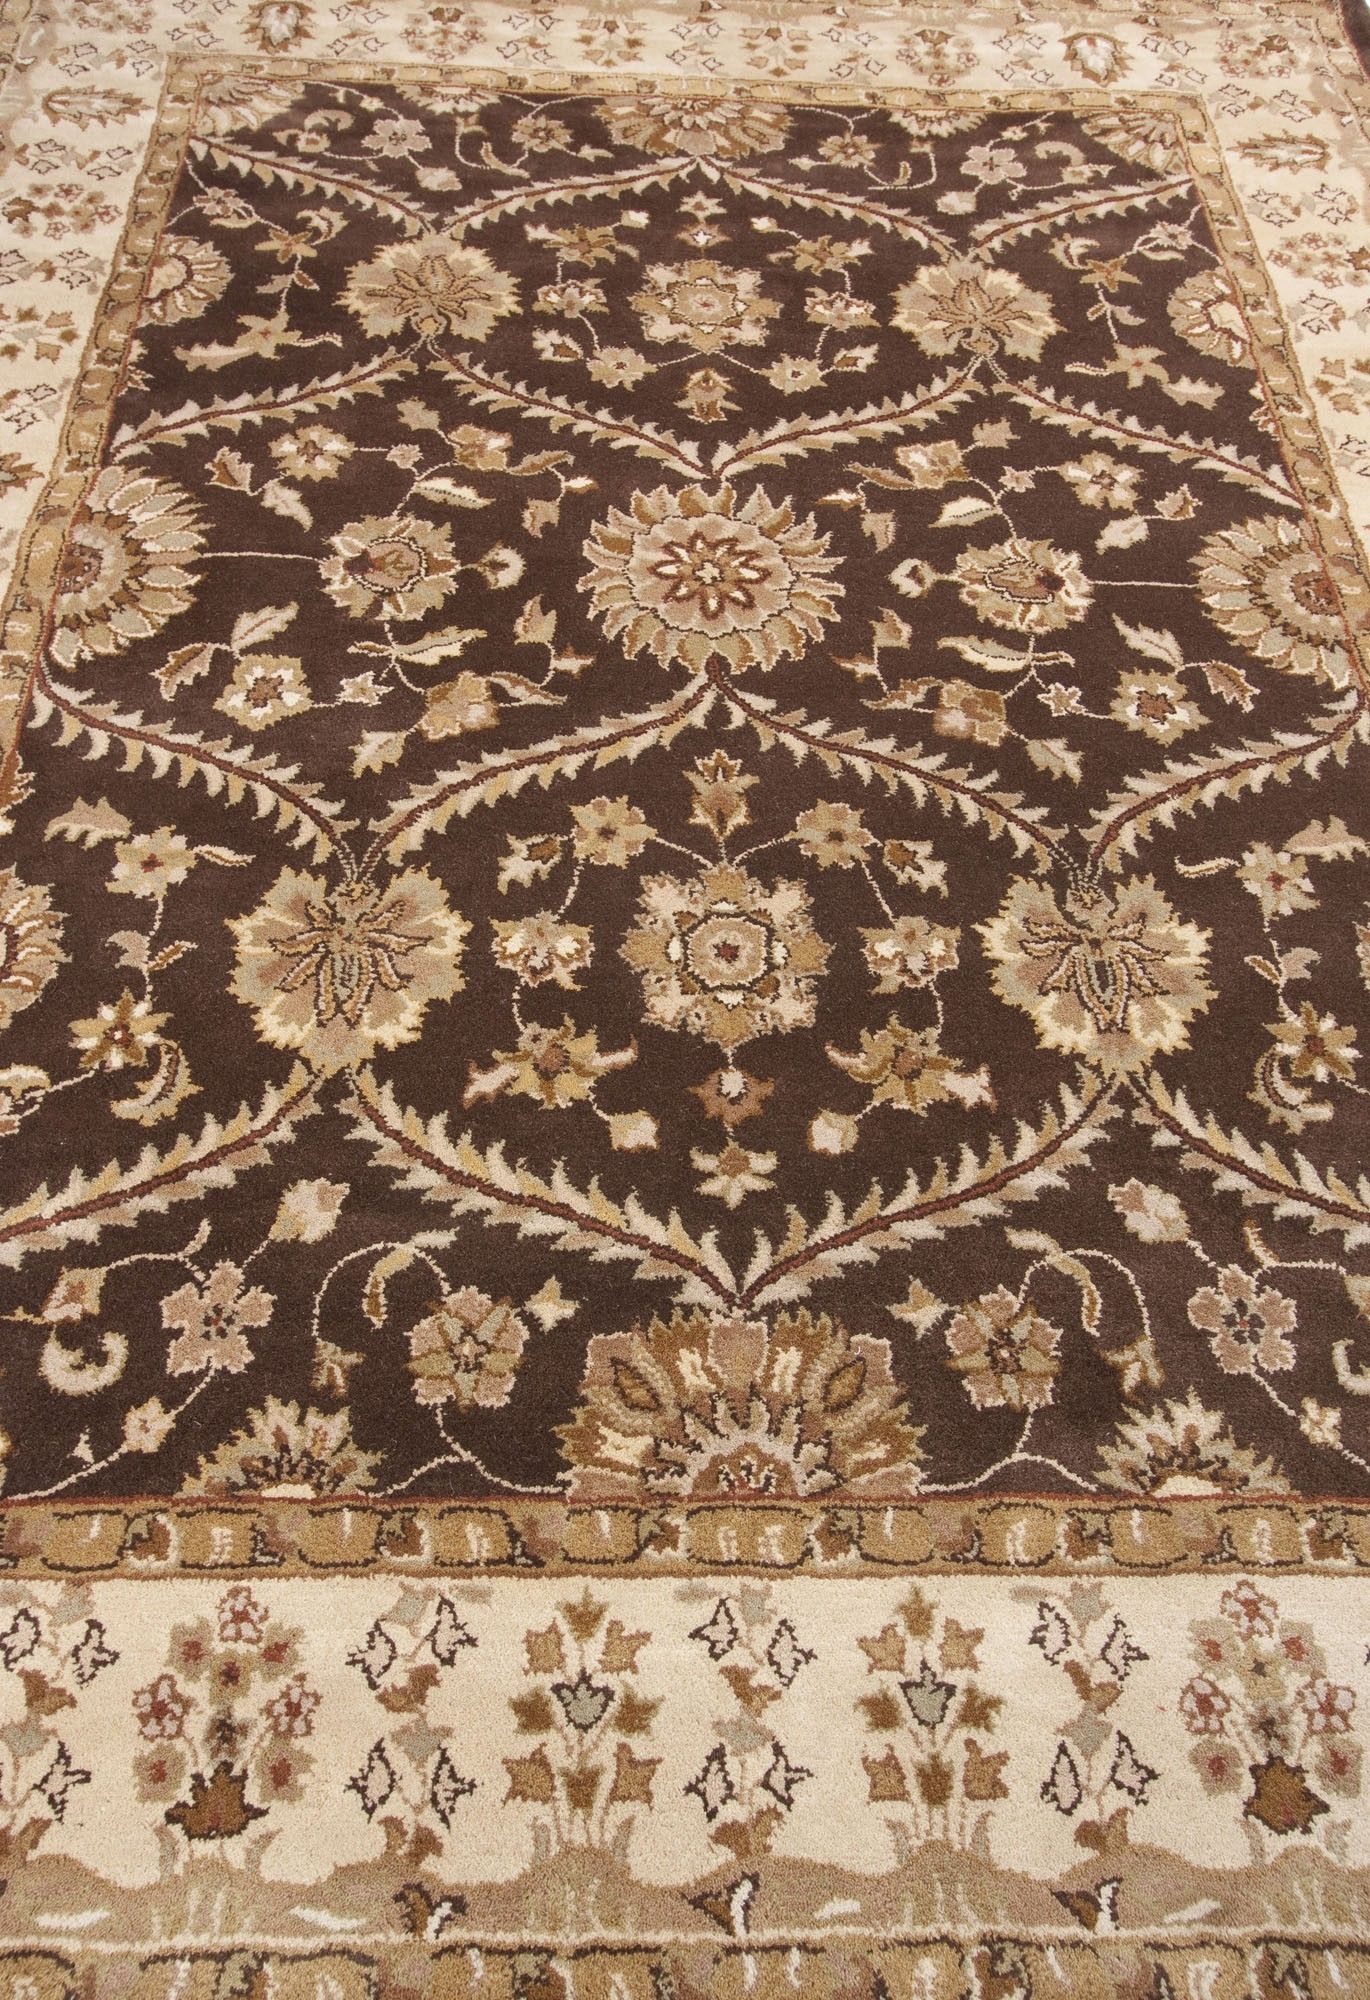 Brown Handmade Traditional Wool Area Rug Carpet Throughout Traditional Wool Area Rugs (View 2 of 15)